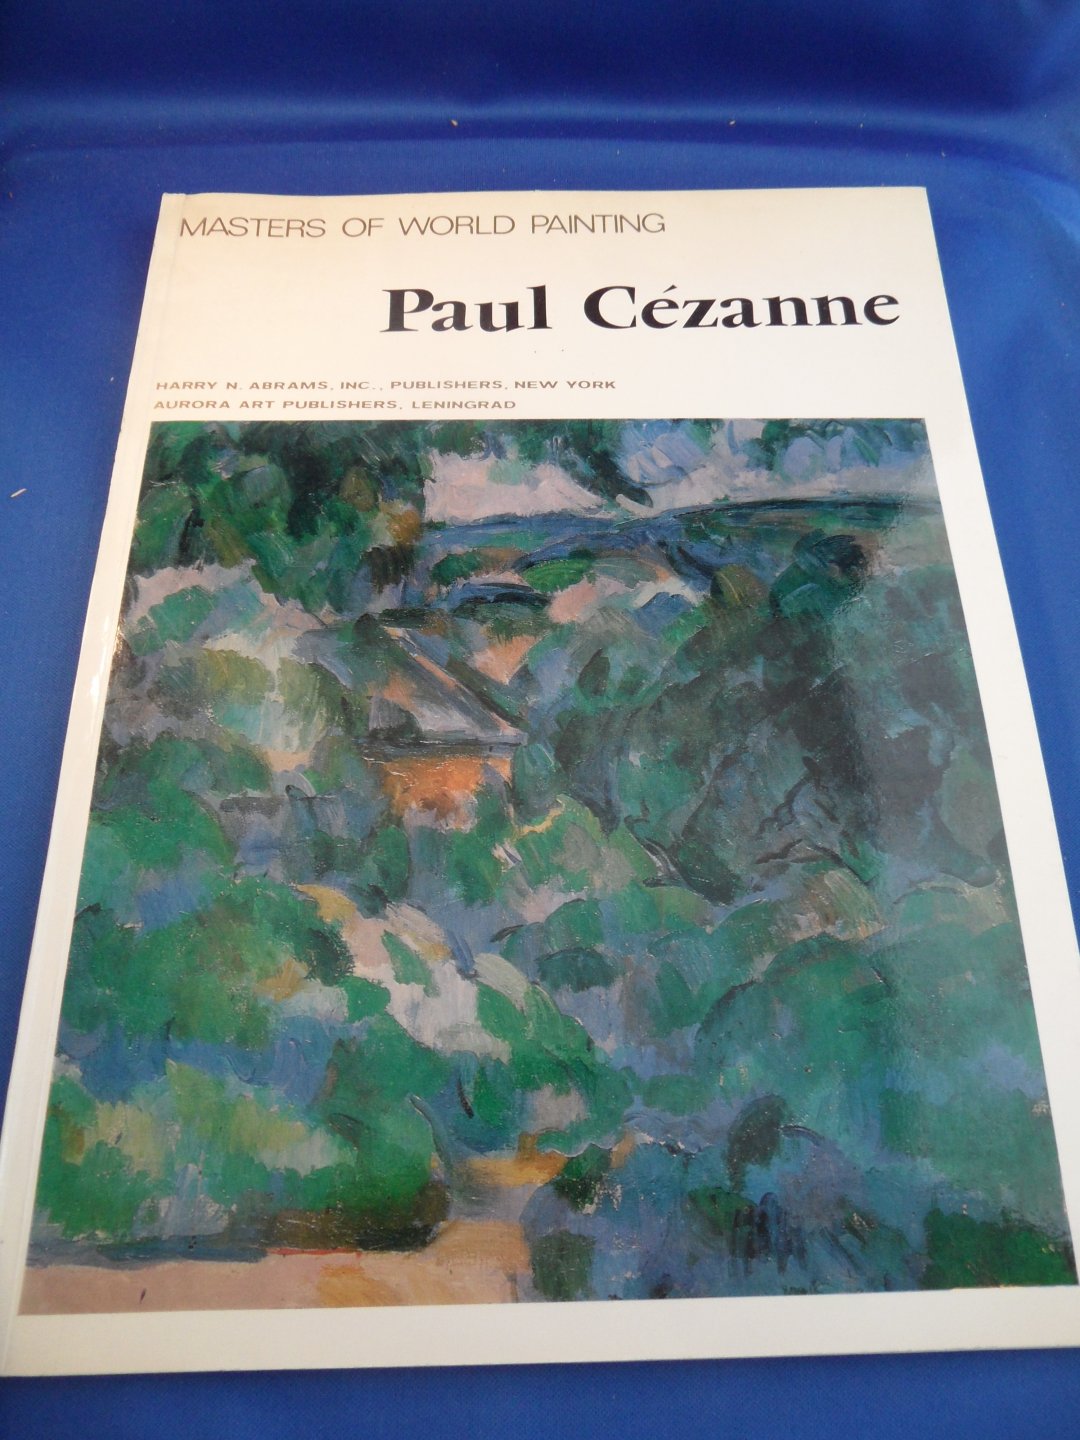 Drevina, Yekatarina - Paul Cézanne